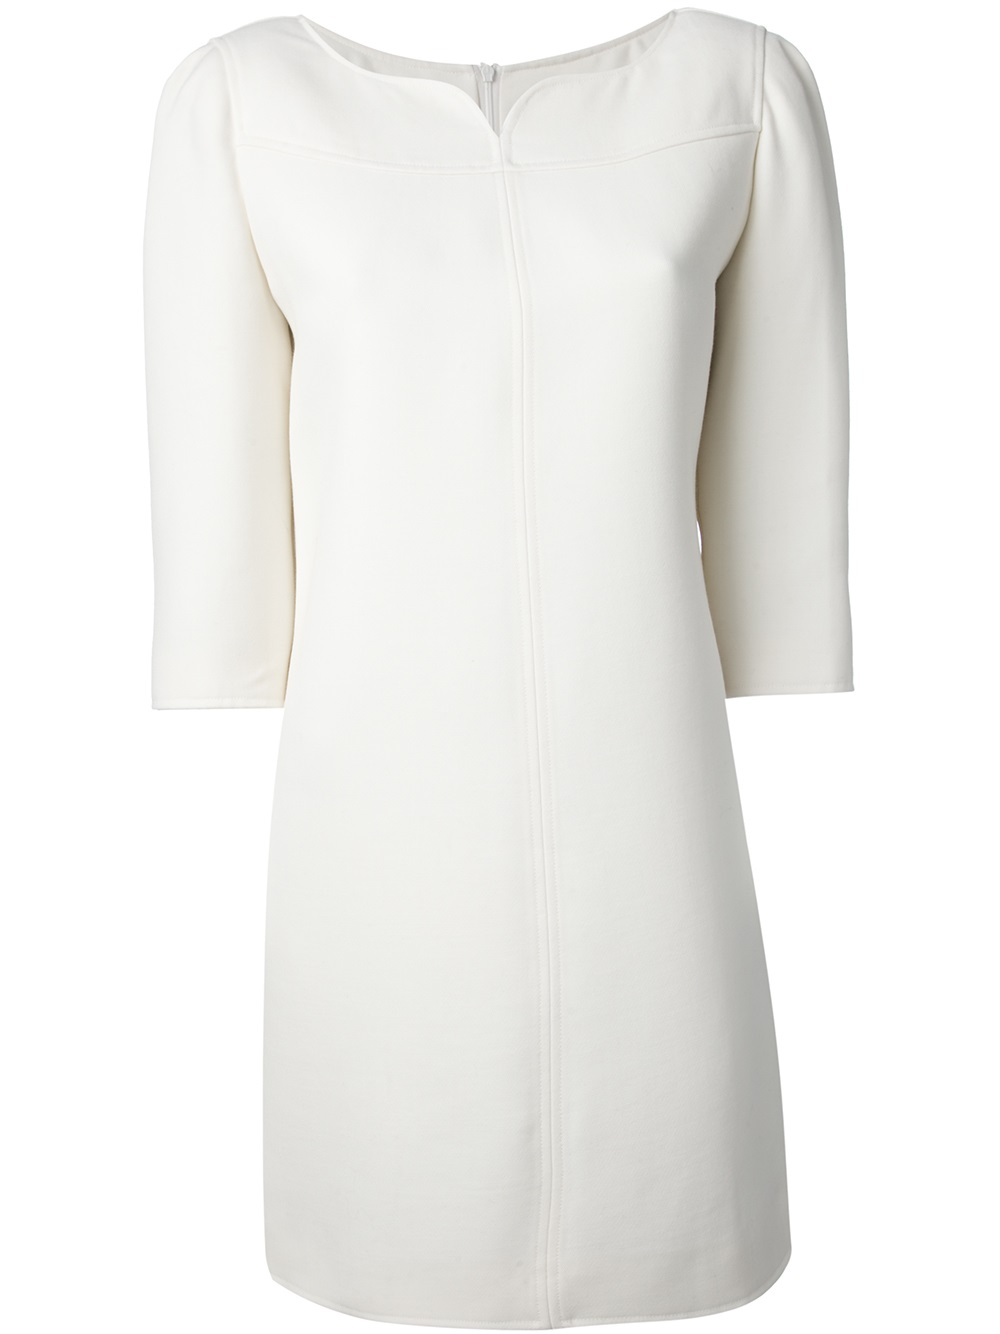 Lyst - Courreges Slit Neck Shift Dress in White